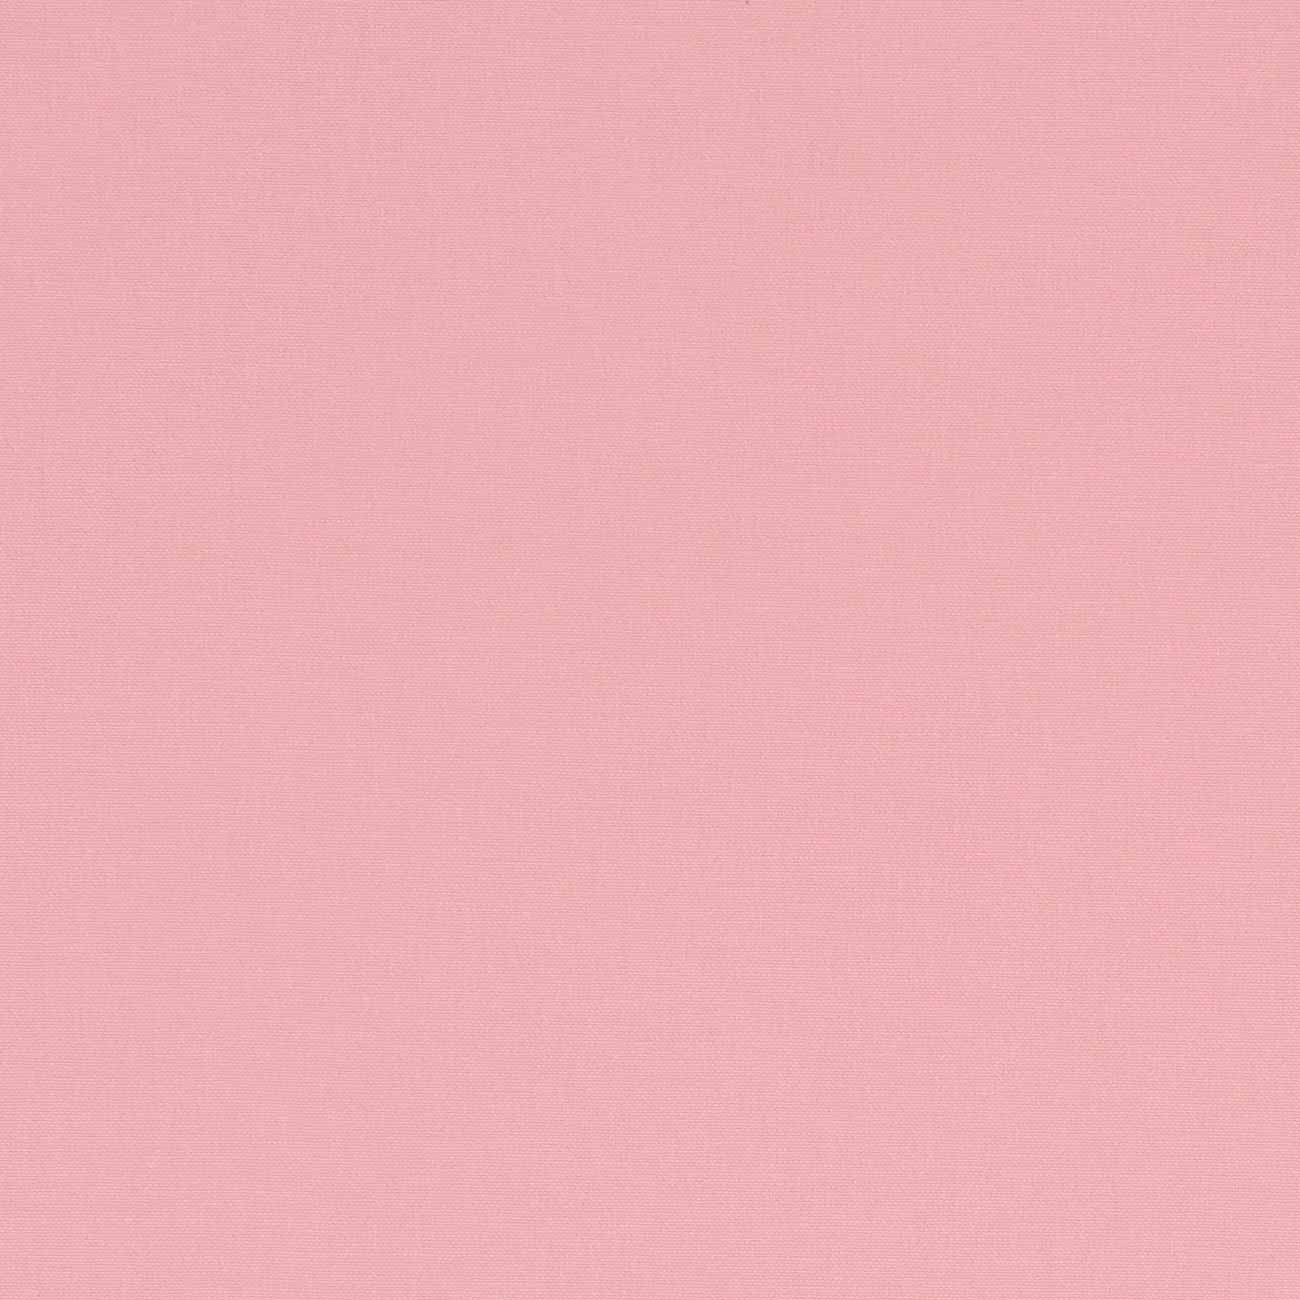 Alora Pink Fabric by Studio G